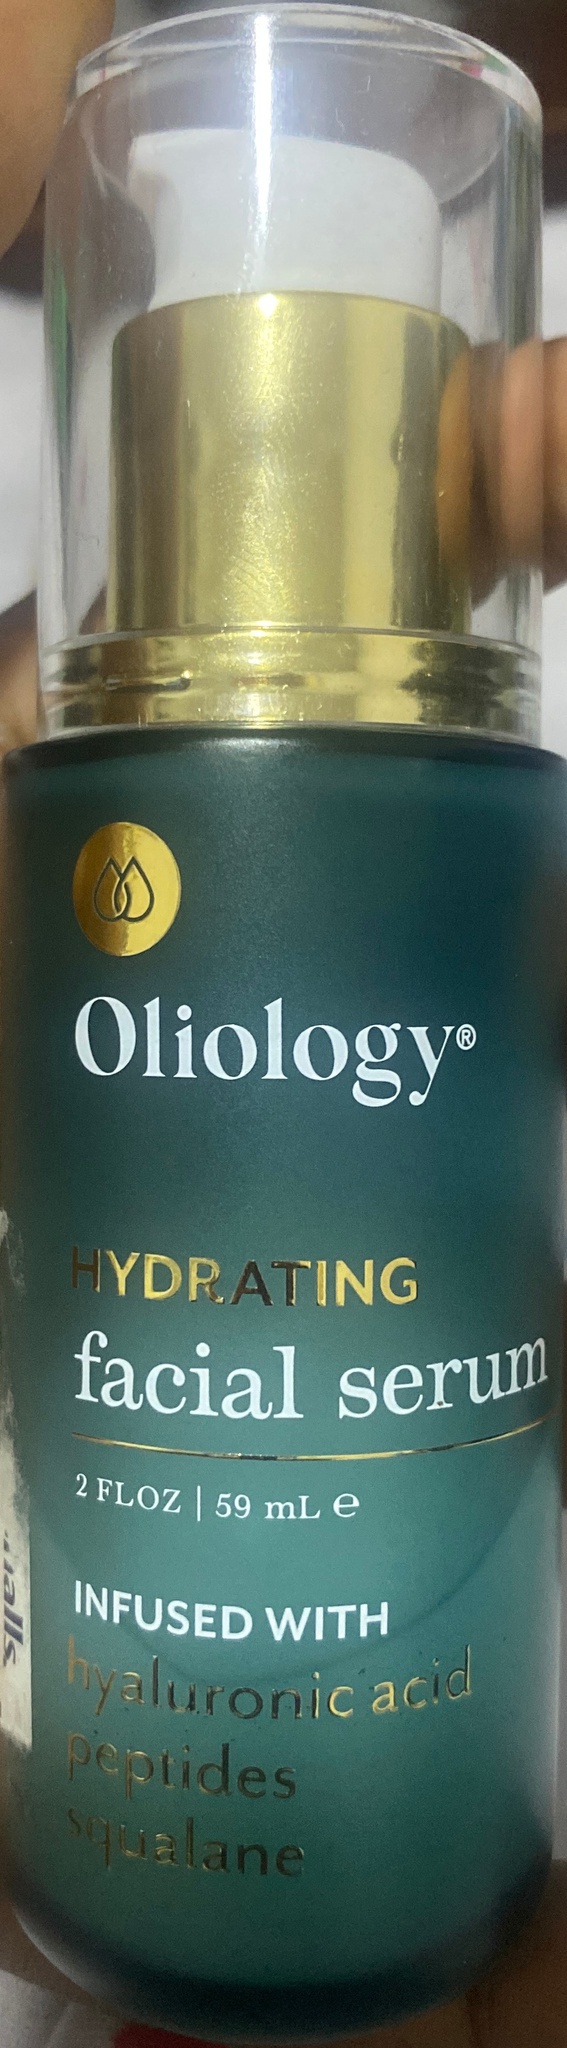 Oliology Hydrating Facial Serum